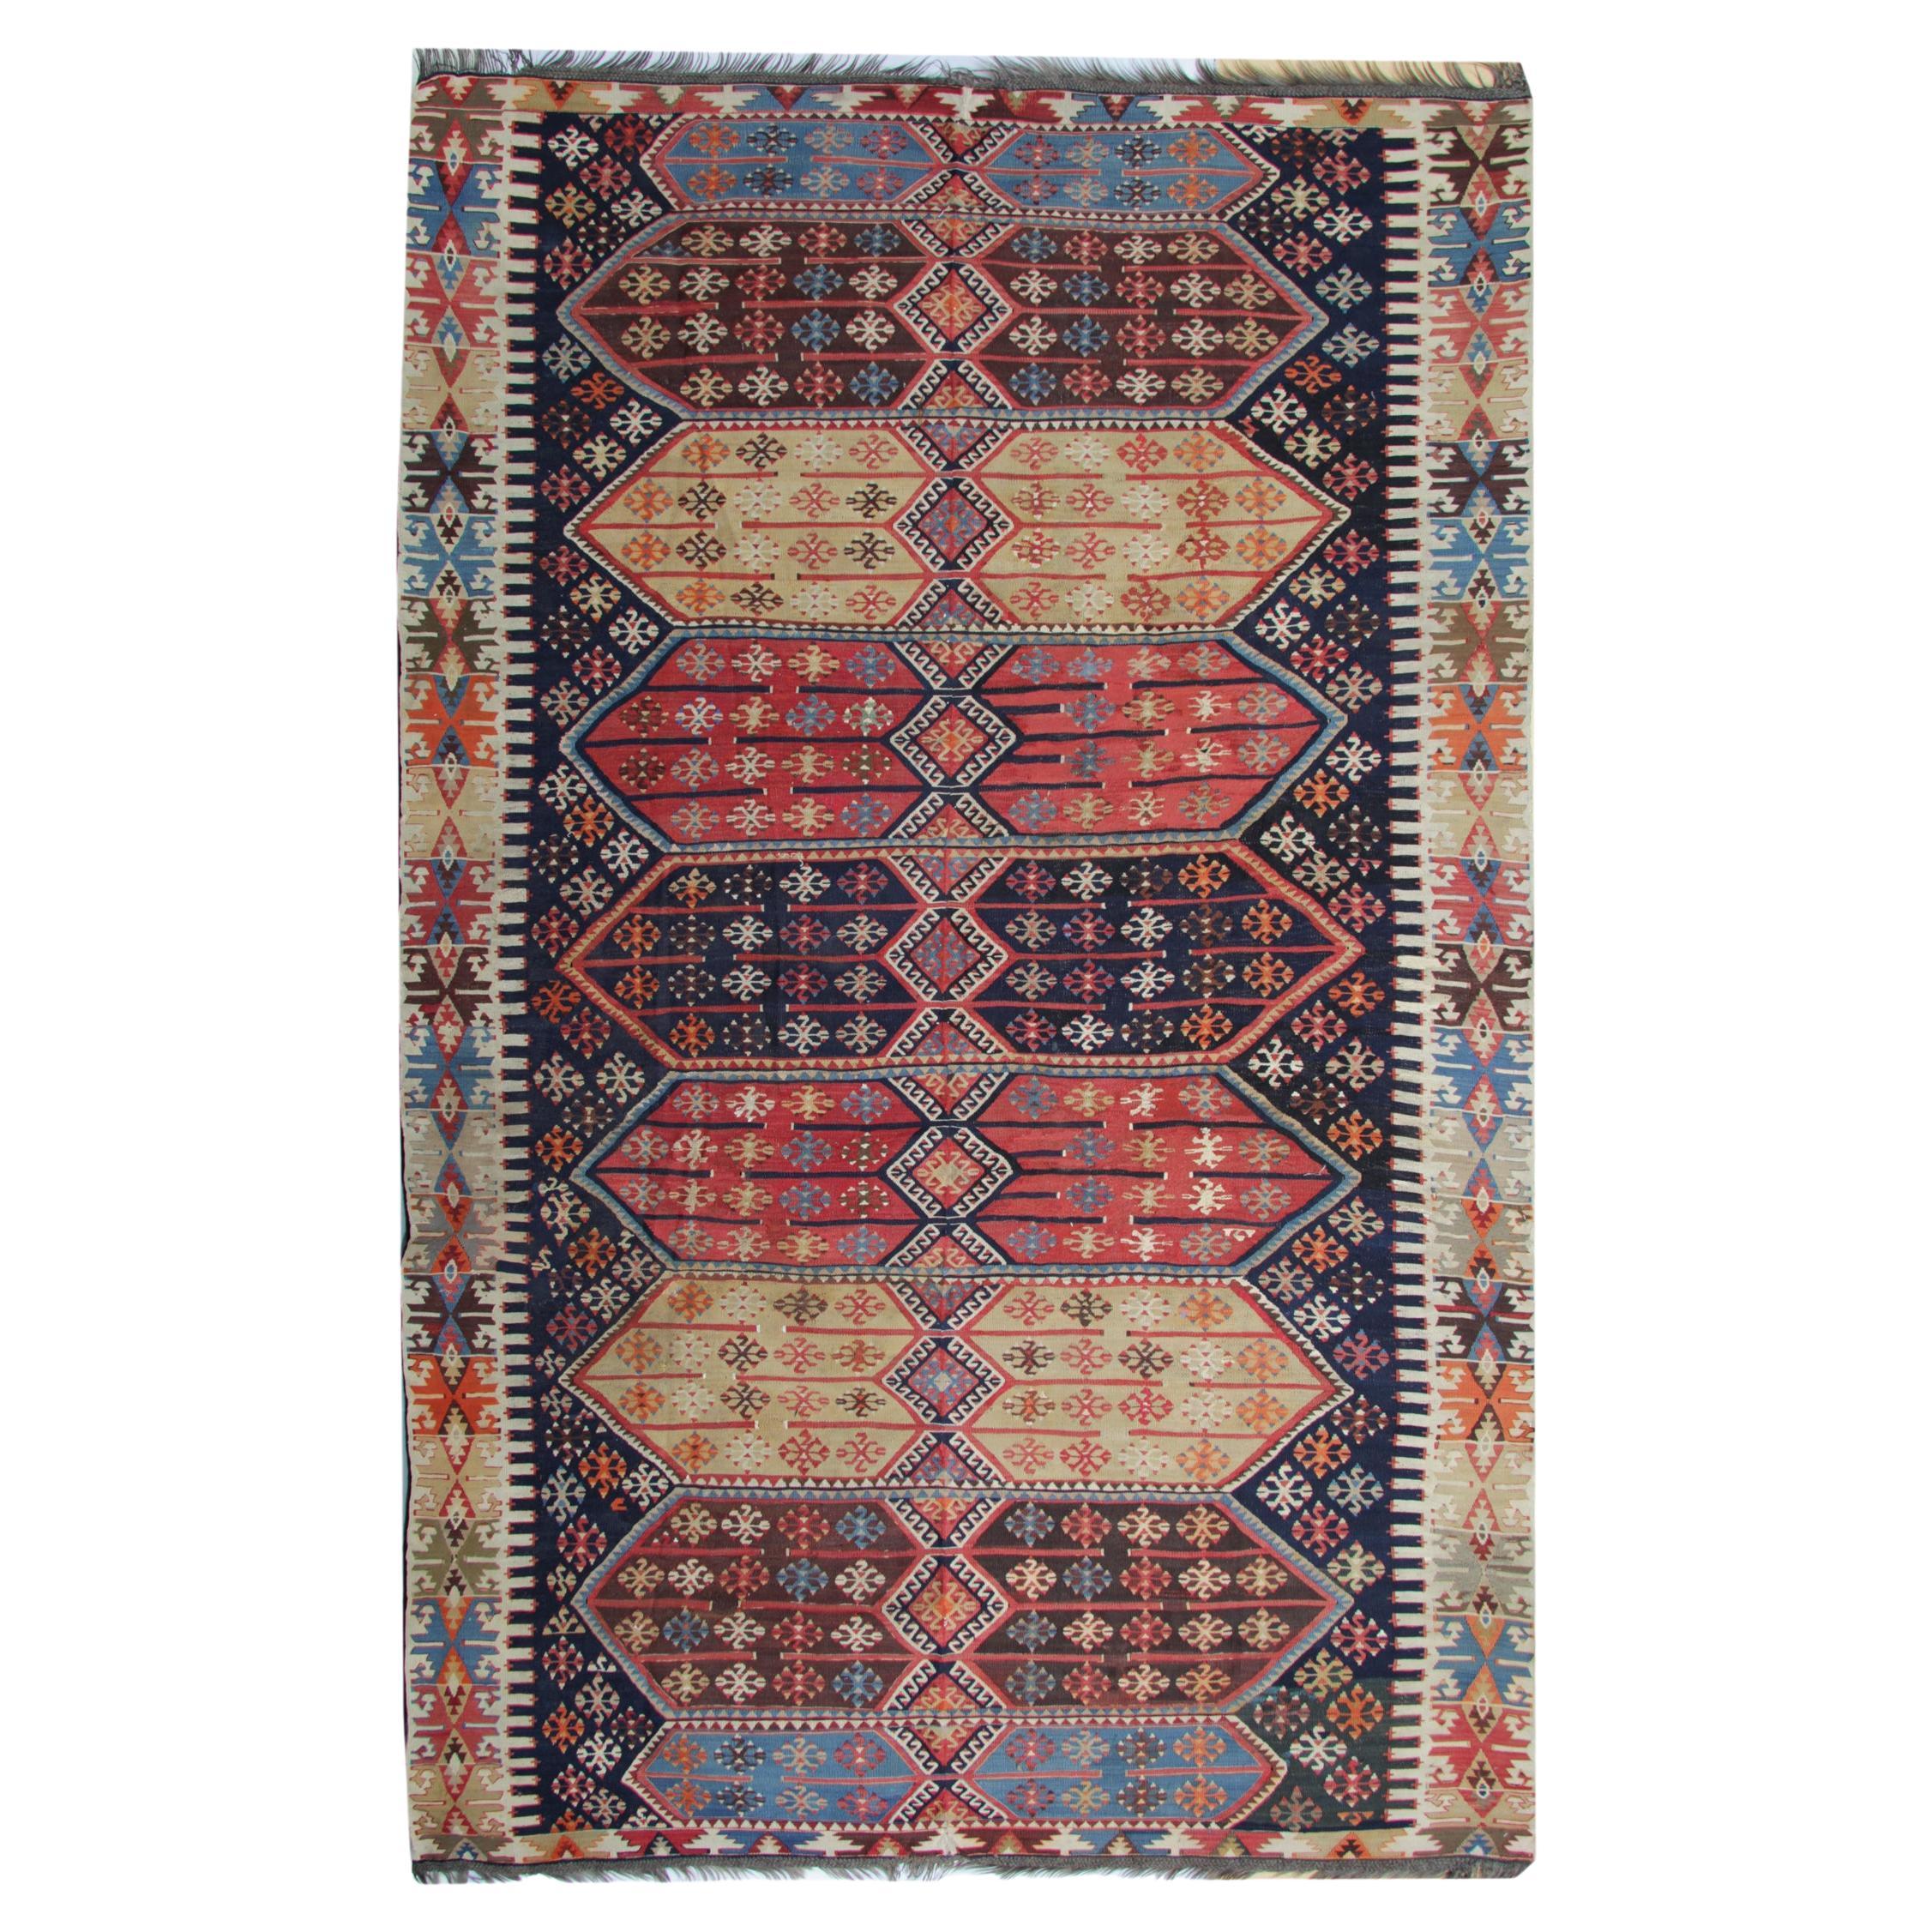 Turkish Rugs, Antique Rugs Kilims from Konya, Handmade Carpet Kilim Rug For Sale